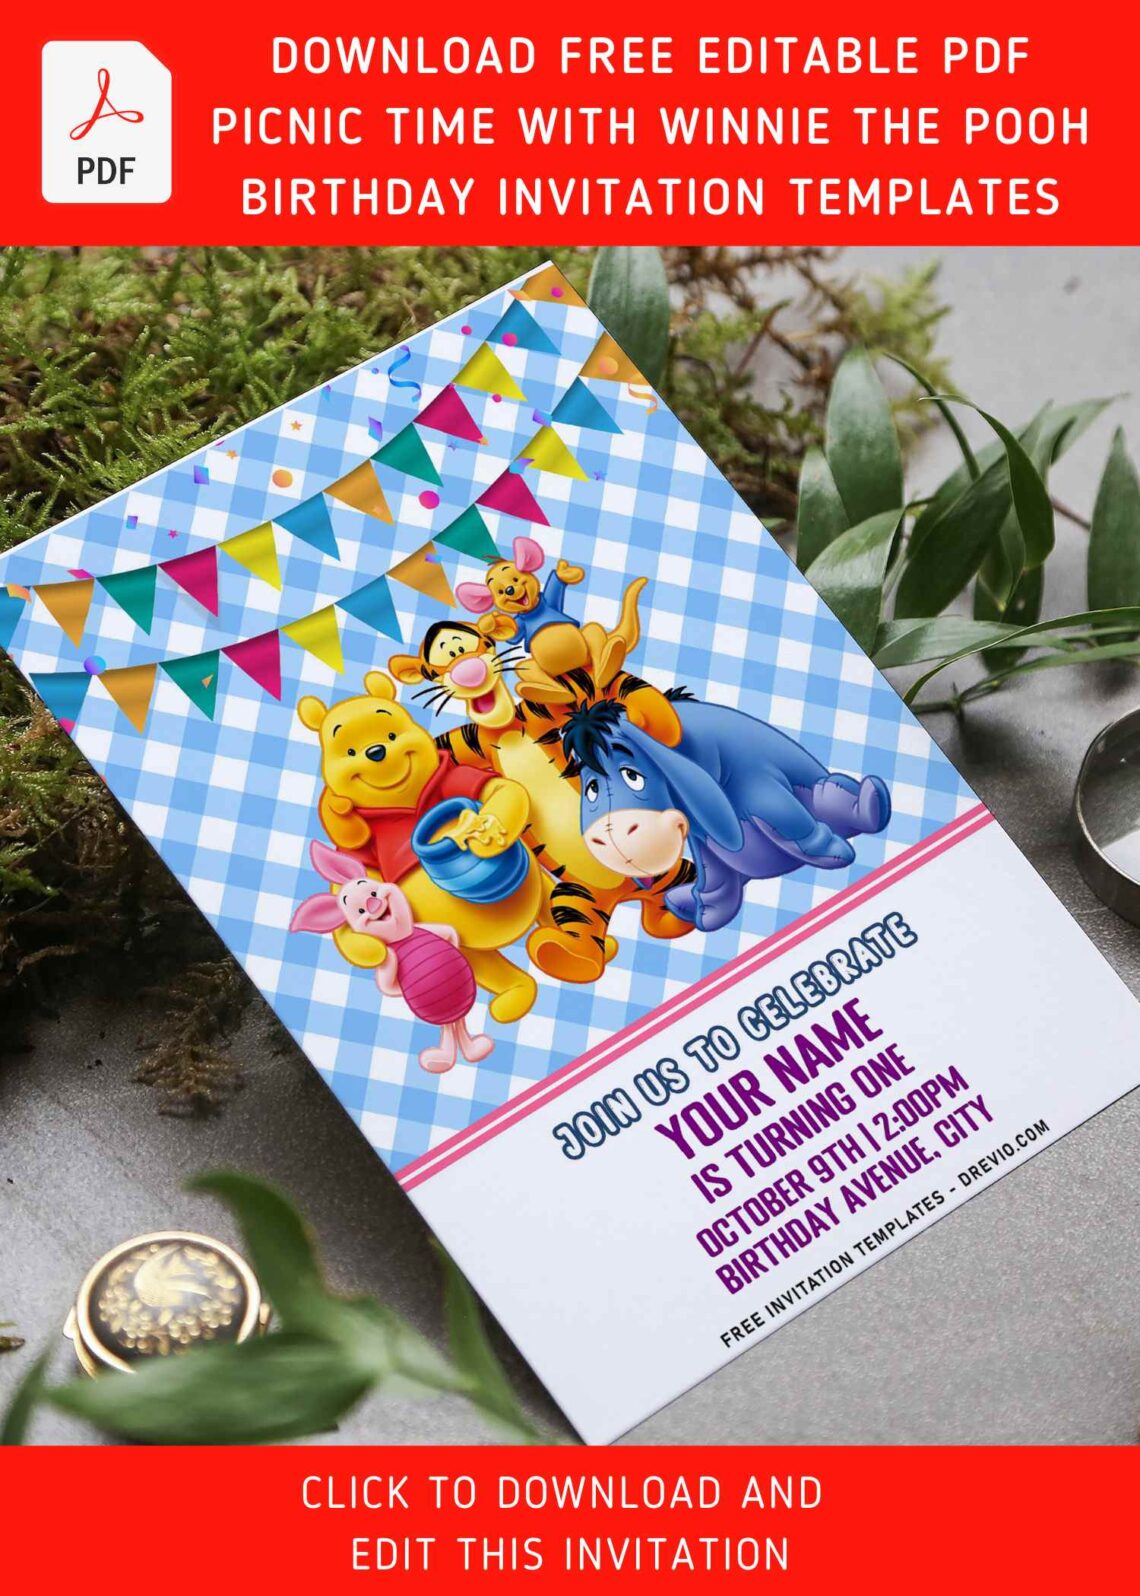 (Free Editable PDF) Fun Picnic Time Winnie The Pooh Birthday Invitation Templates